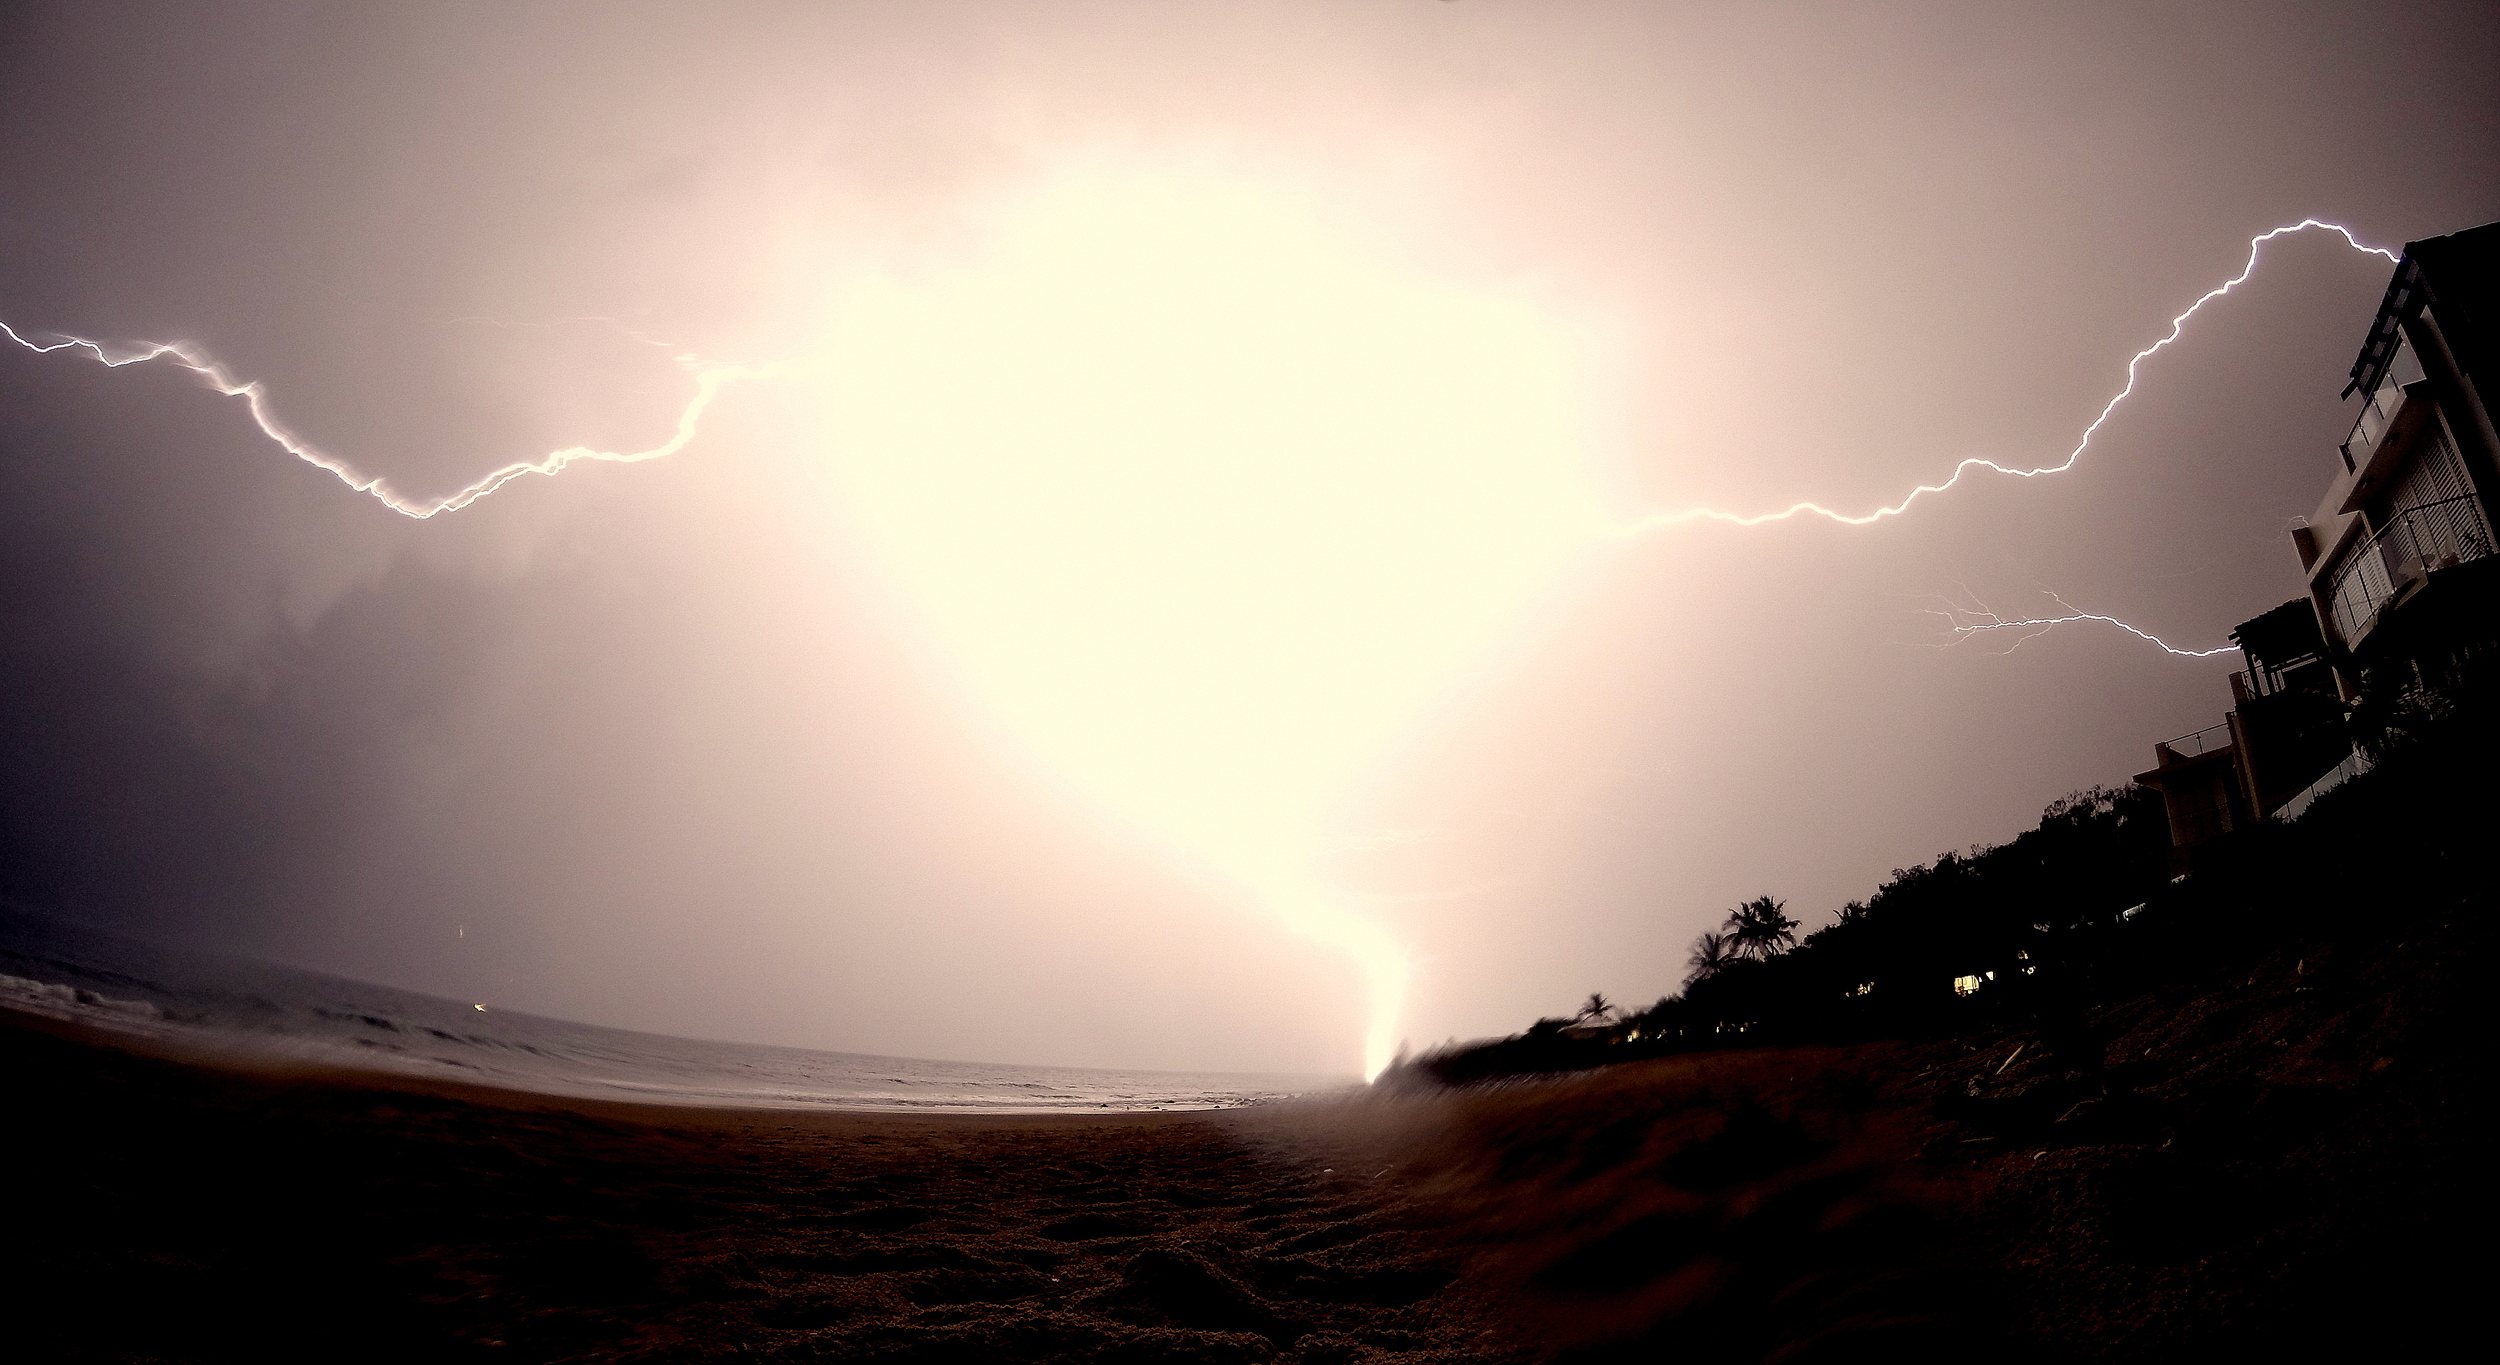 Storm - Bargara, Australia